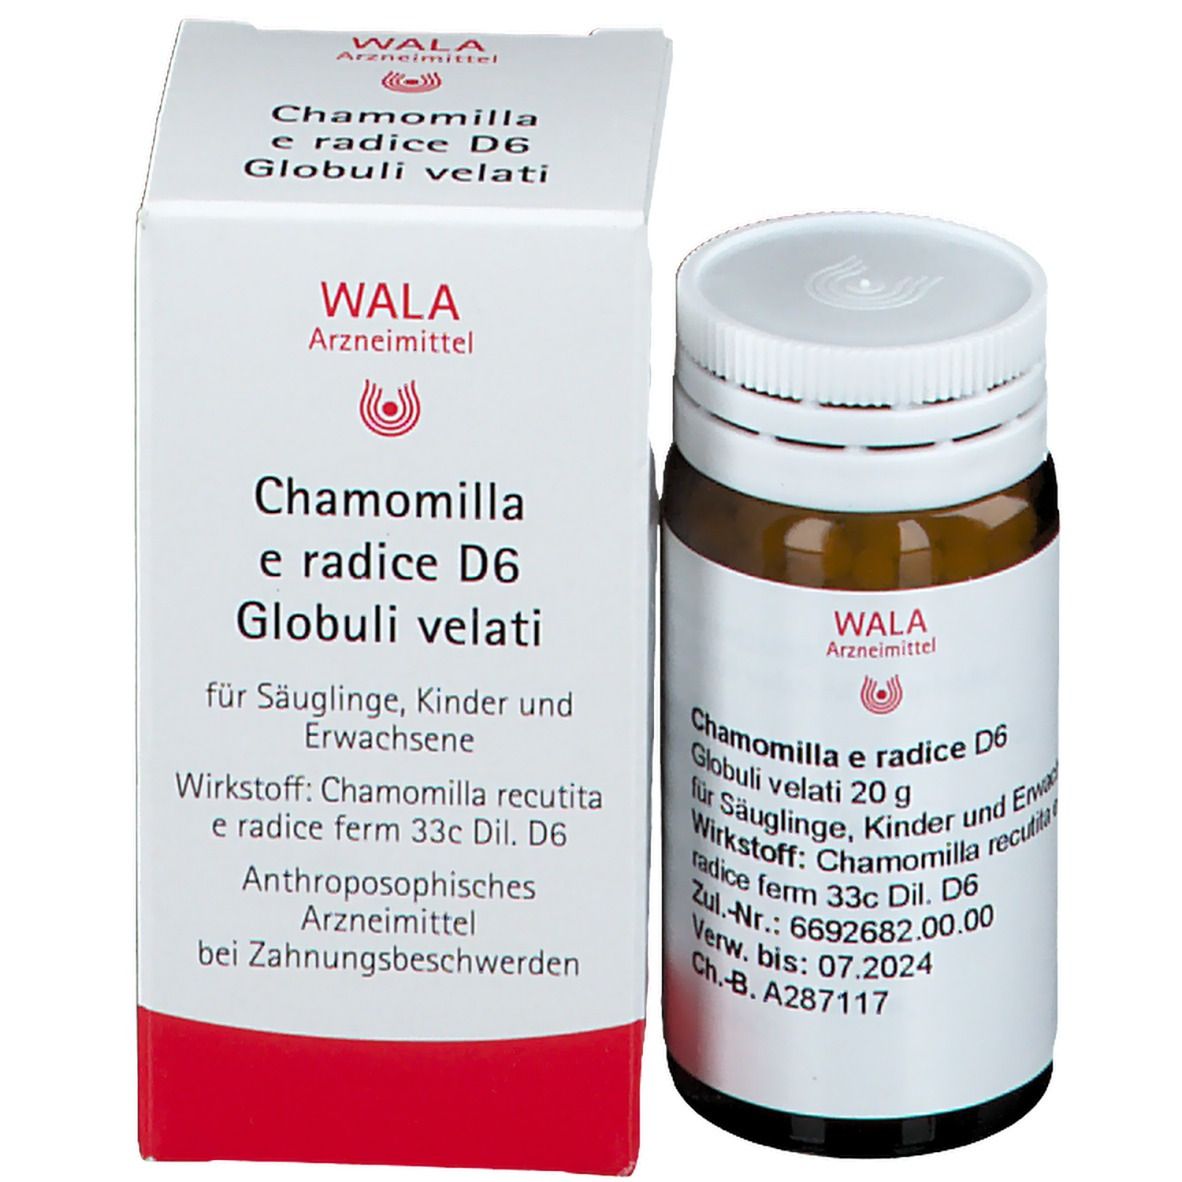 WALA® Chamomilla e radice D 6 Globuli